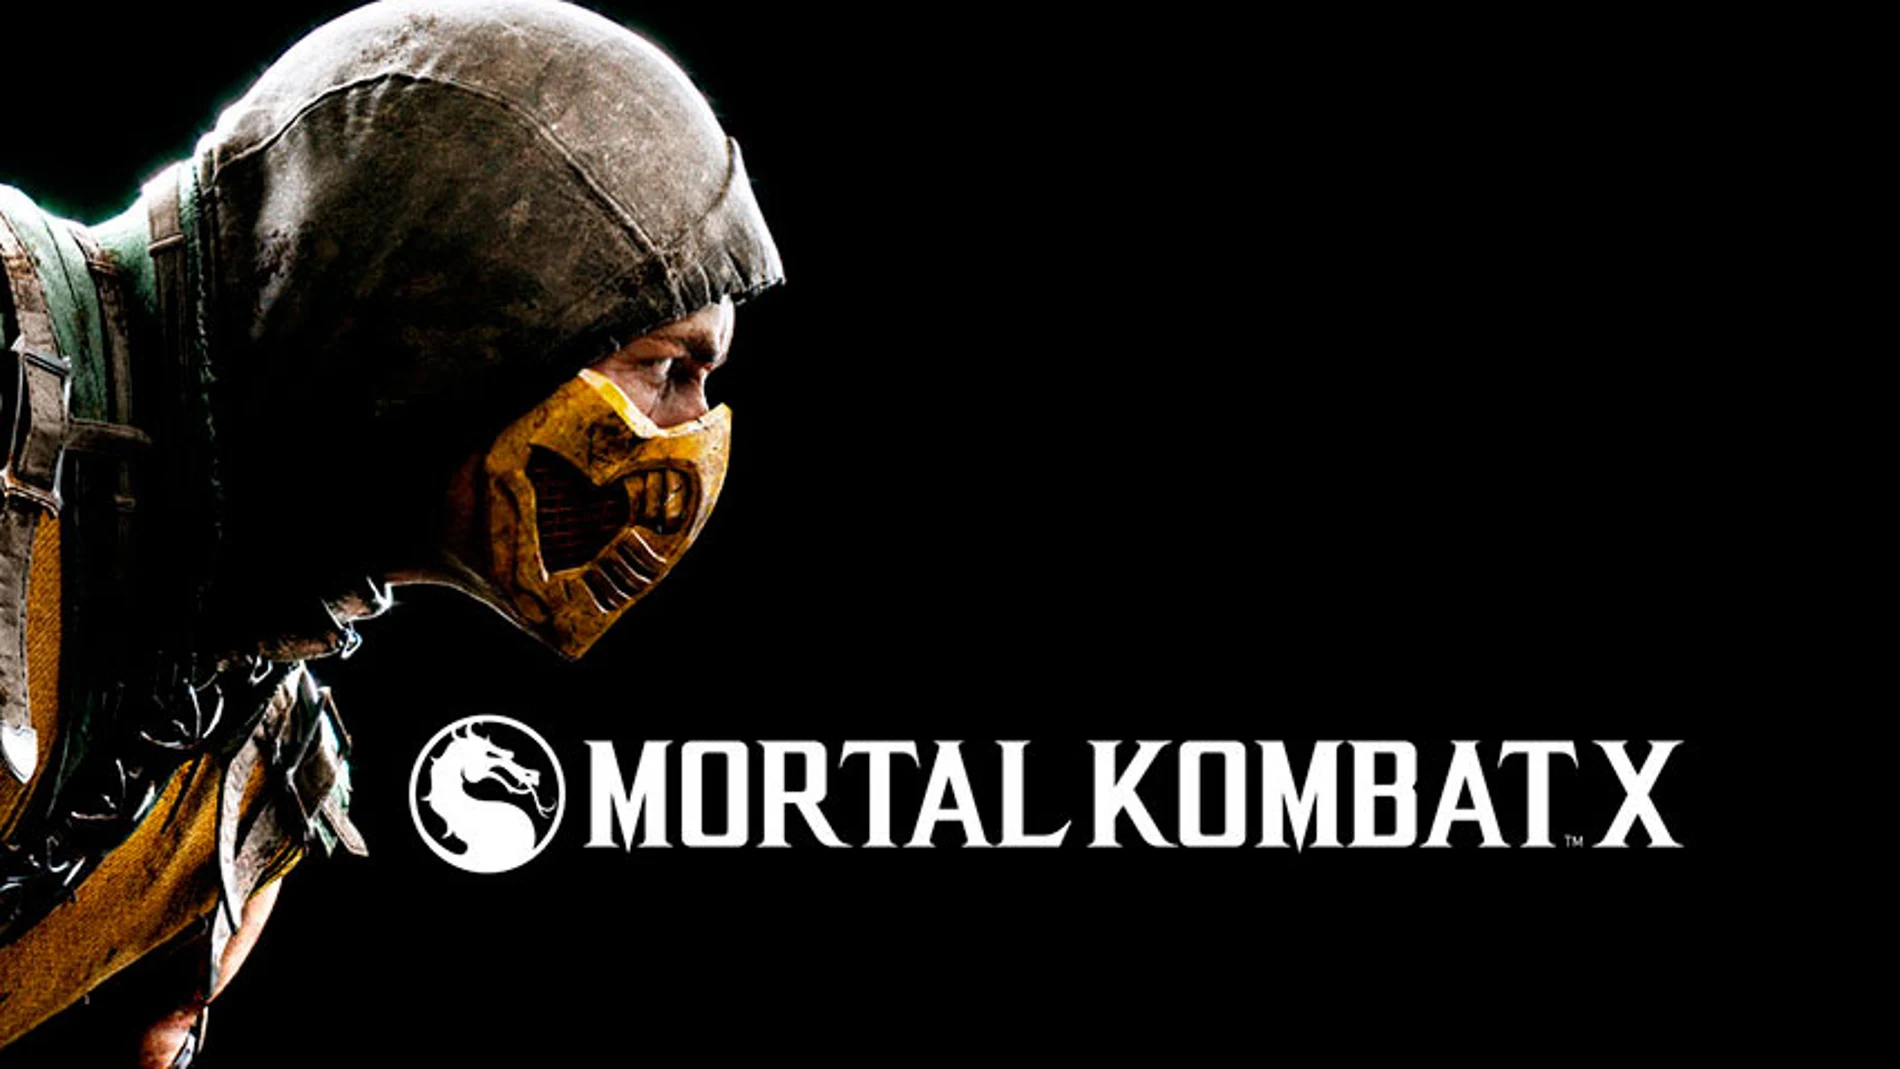 «Mortal Kombat X» ya disponible en PlayStation 4, Xbox One, y PC